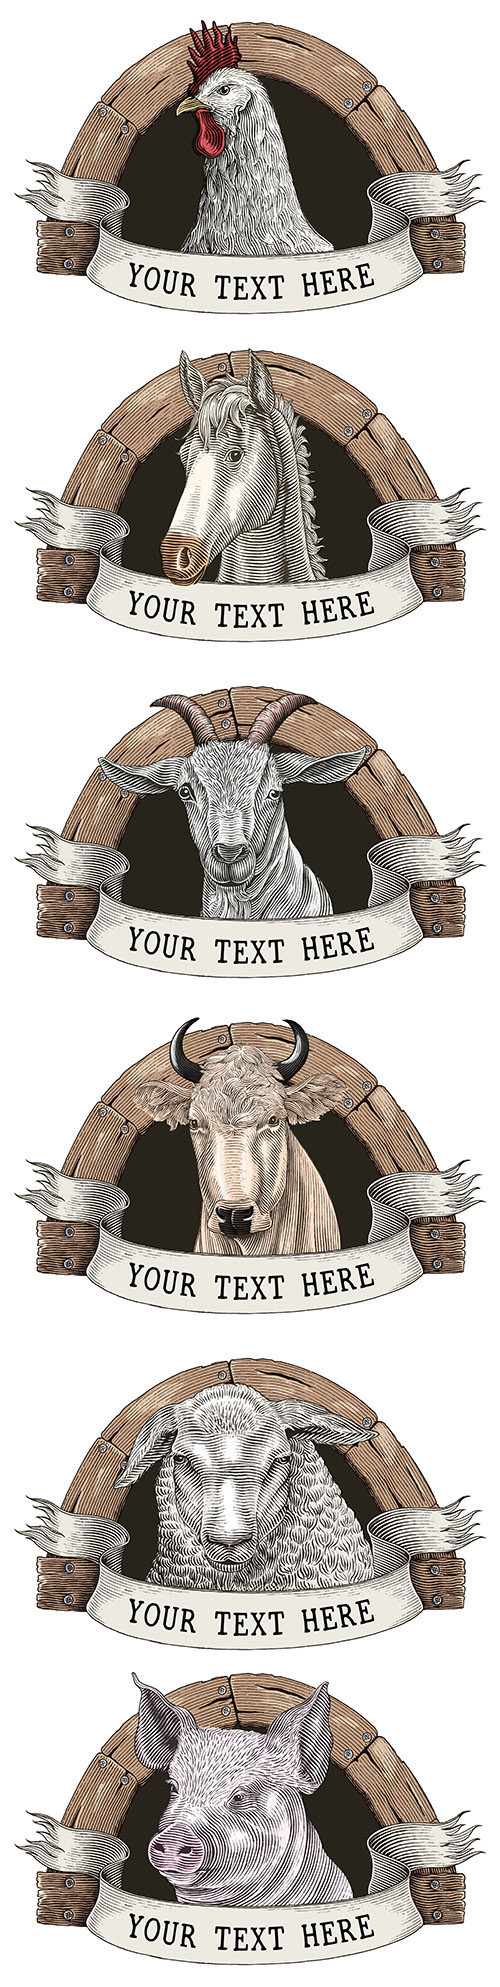 Farm animal logo design ancient engravings style
